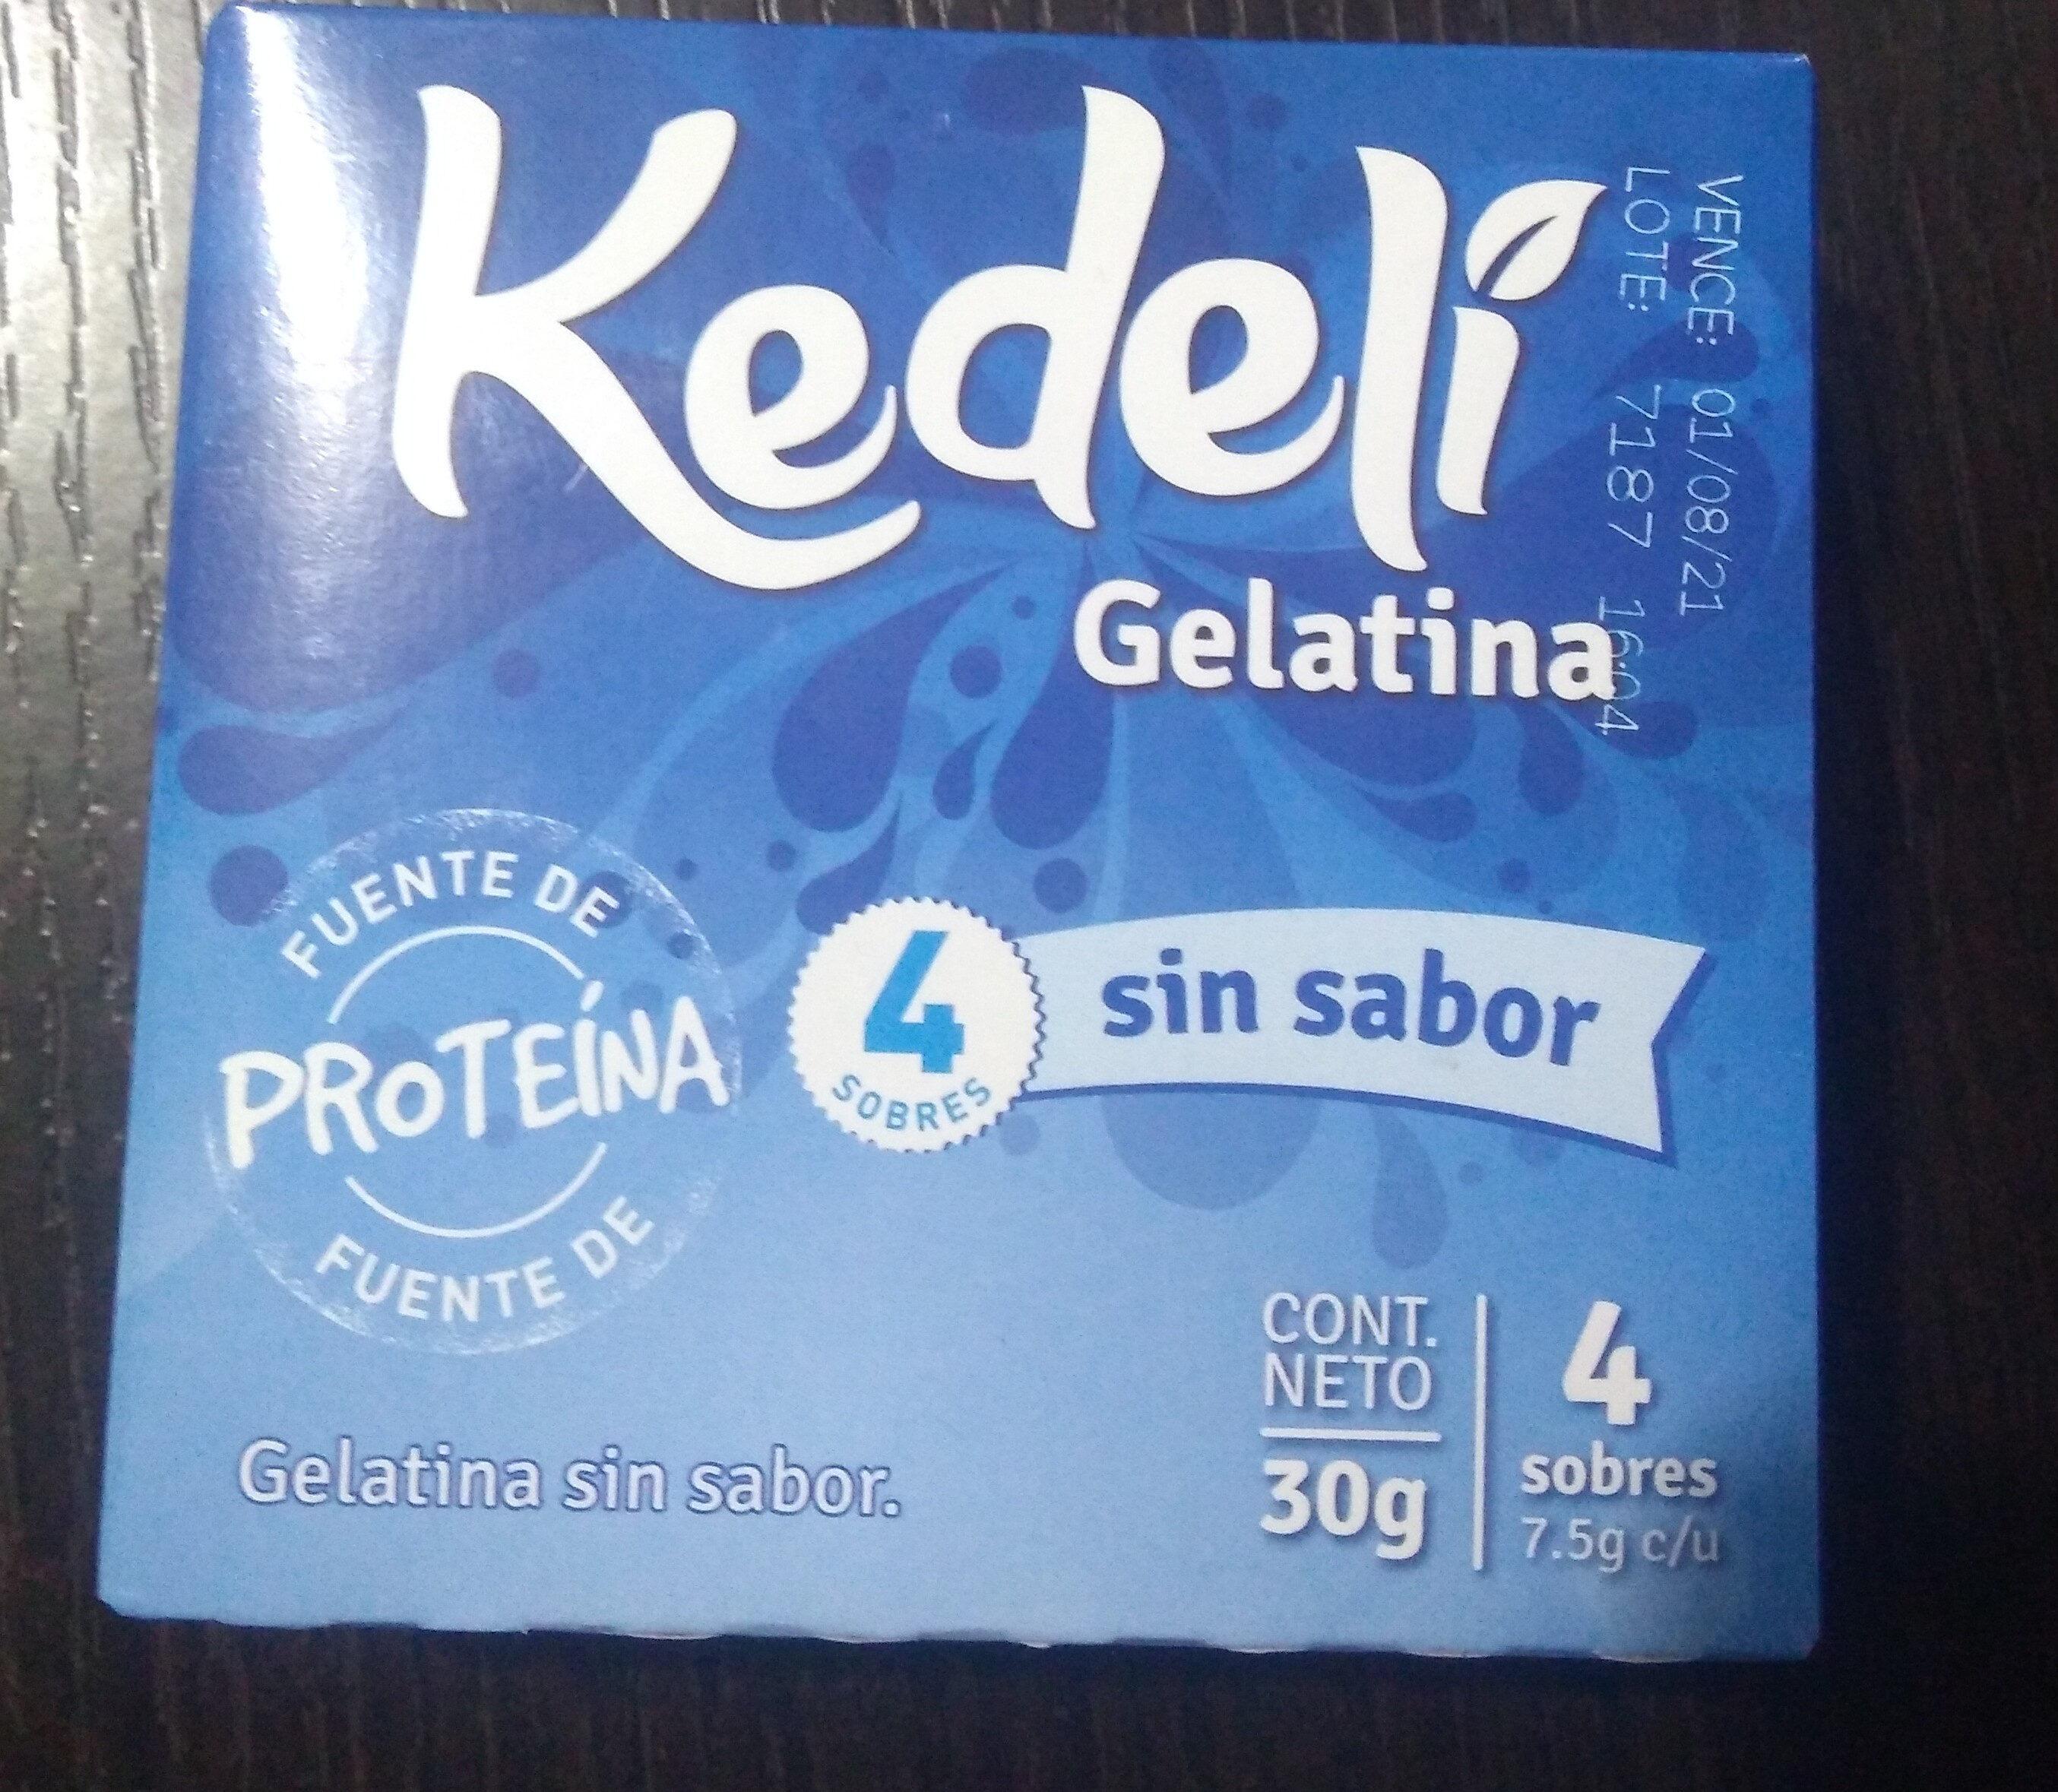 kedeli gelatina - Product - es